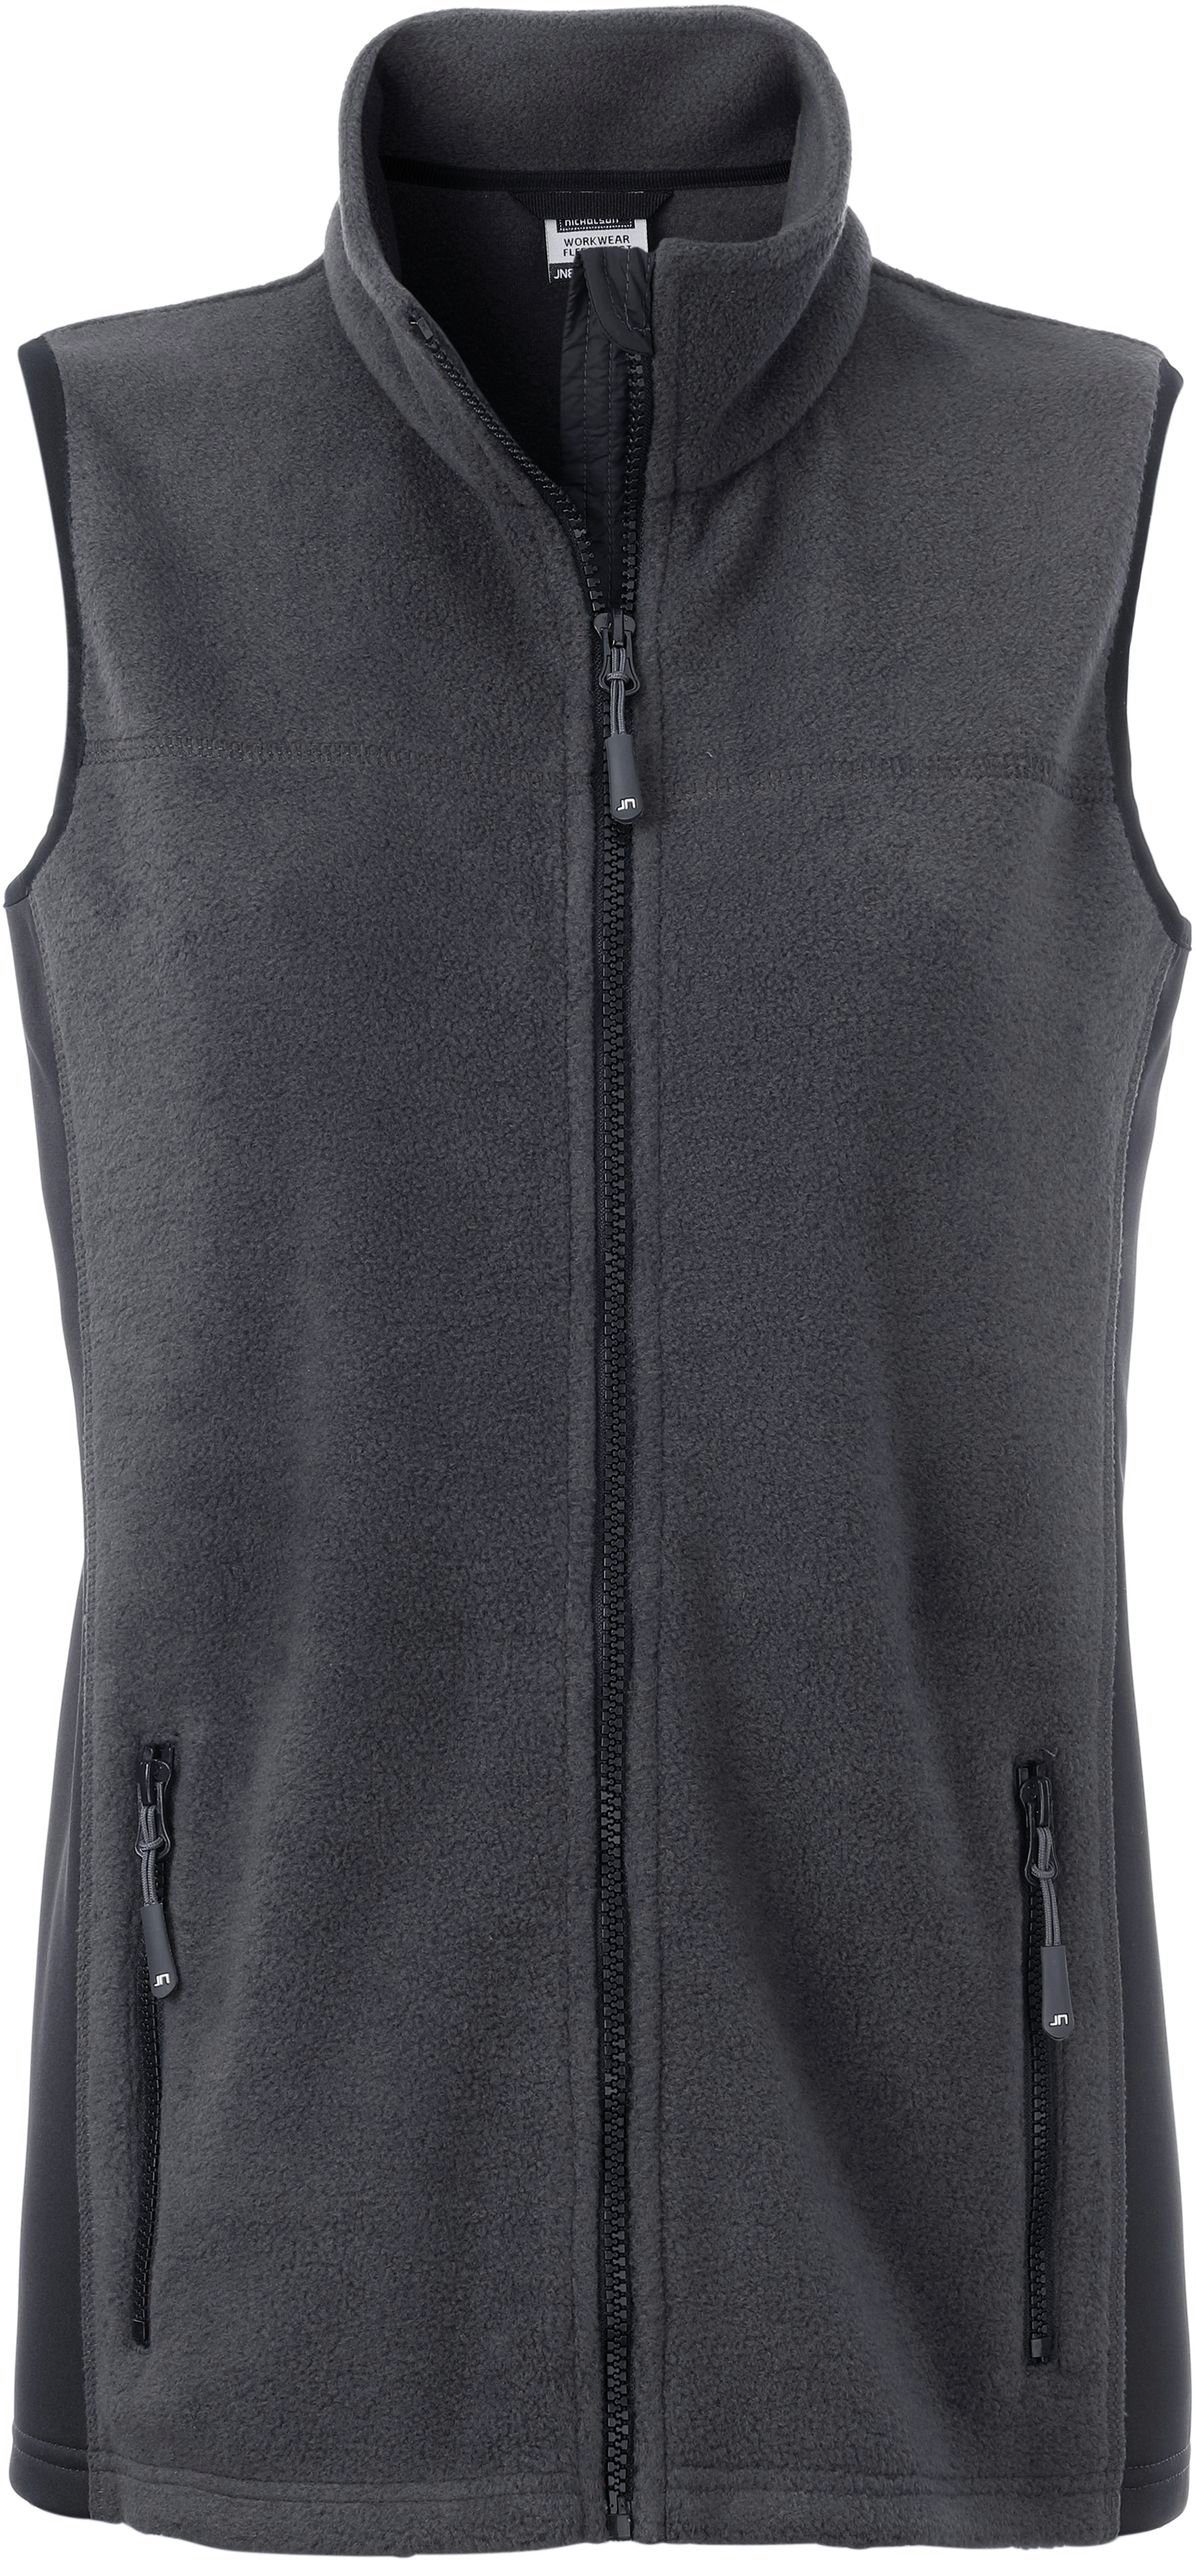 James & Gilet Fleece Fleeceweste FaS50855 carbon/black Workwear Nicholson Weste